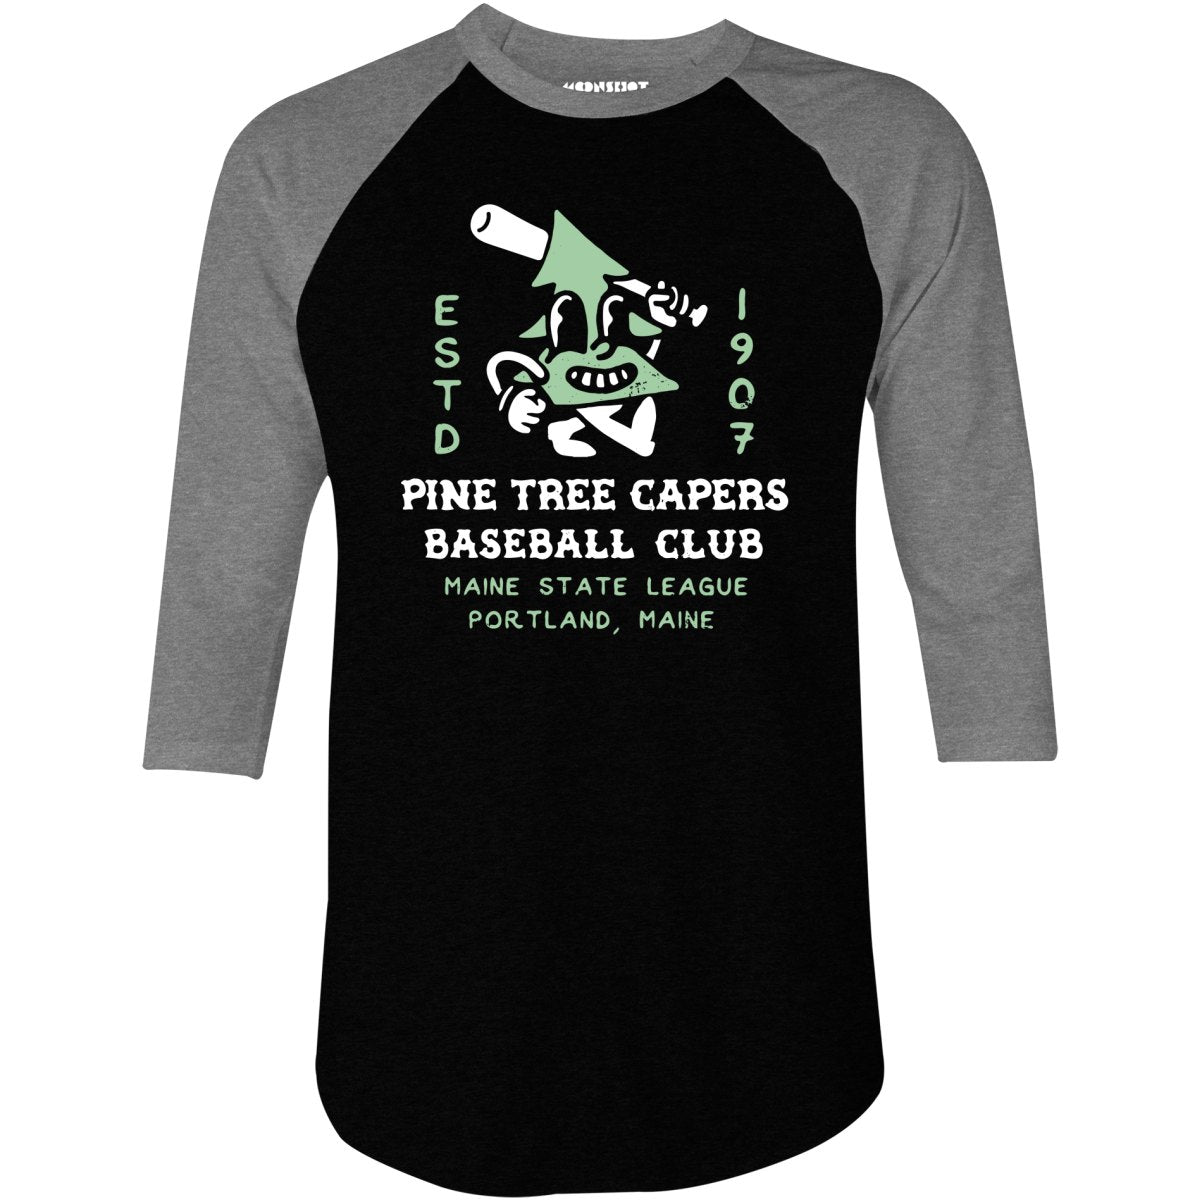 Pine Tree Capers - Portland, ME - Vintage Defunct Baseball Teams - 3/4 Sleeve Raglan T-Shirt